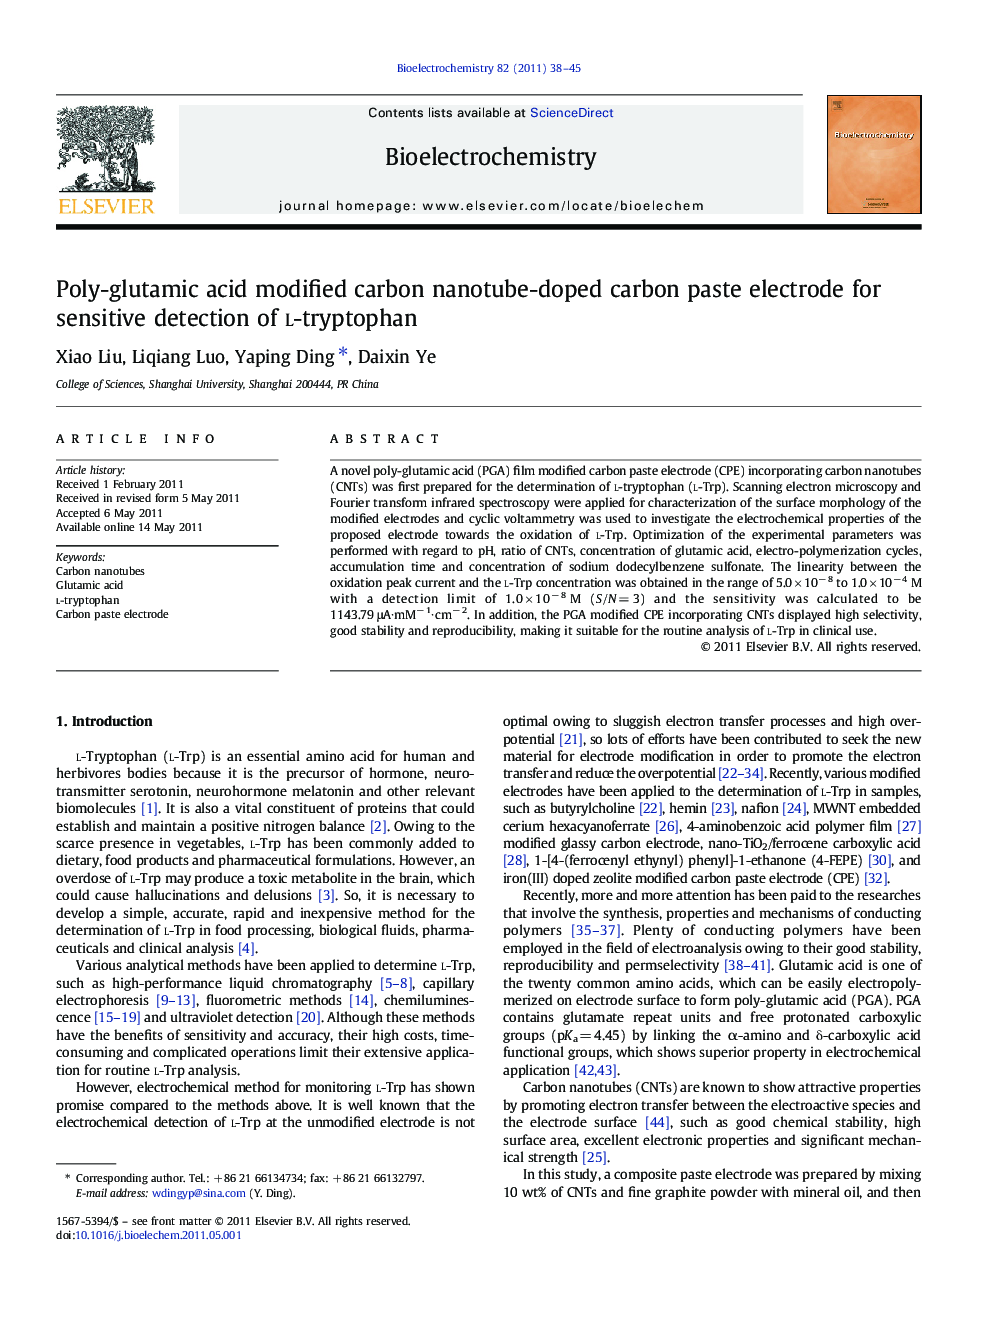 Poly-glutamic acid modified carbon nanotube-doped carbon paste electrode for sensitive detection of L-tryptophan